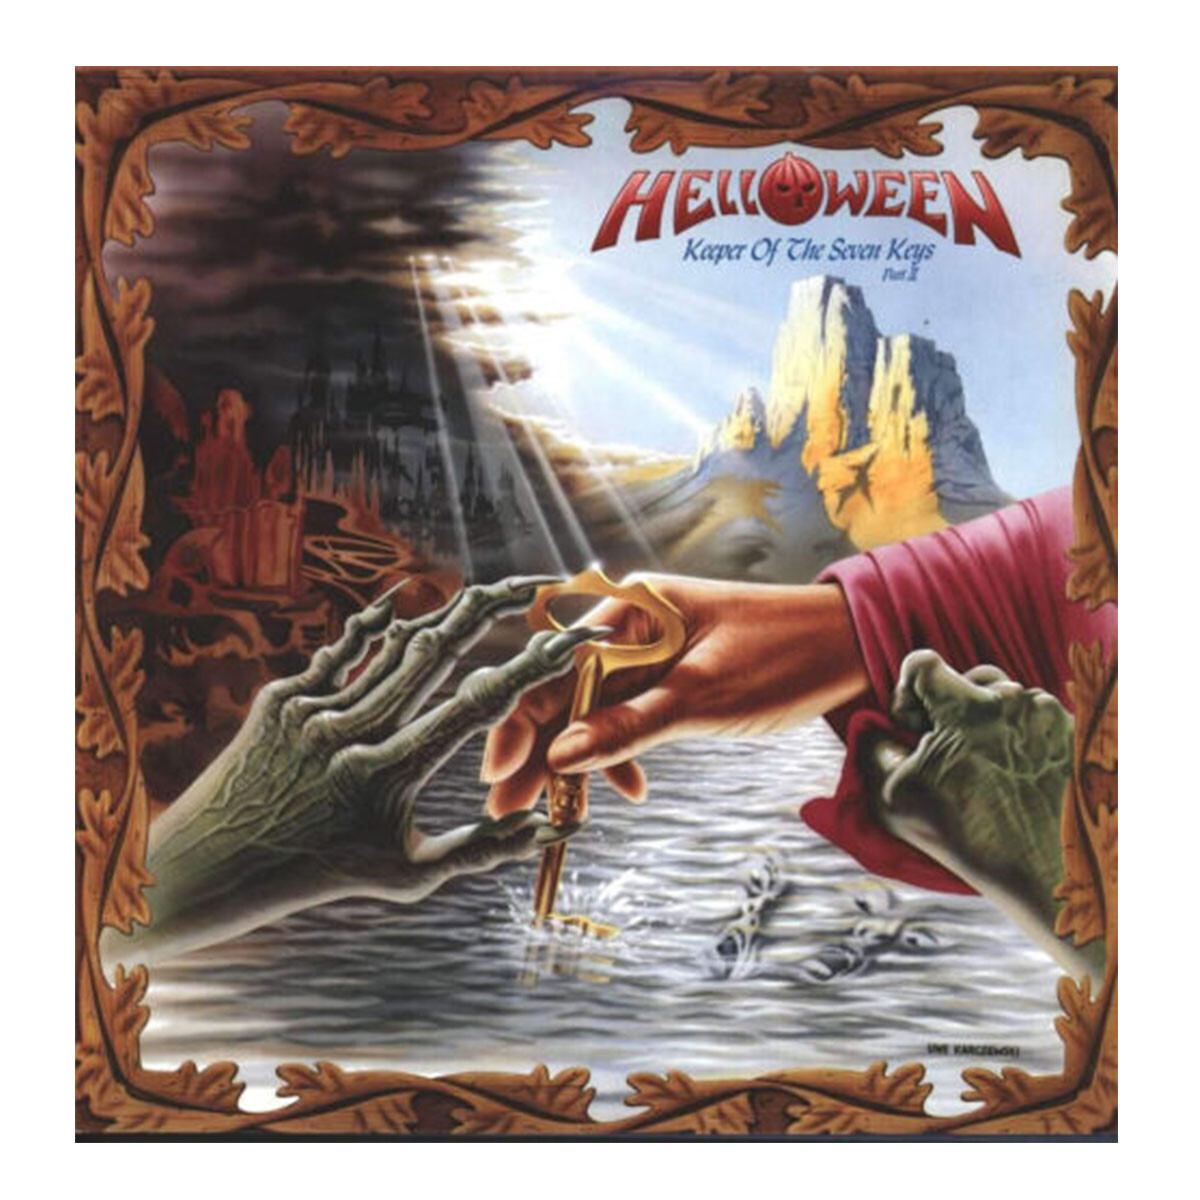 Helloween-keeper Of The Seven Keys Pt. Ii (esp) 